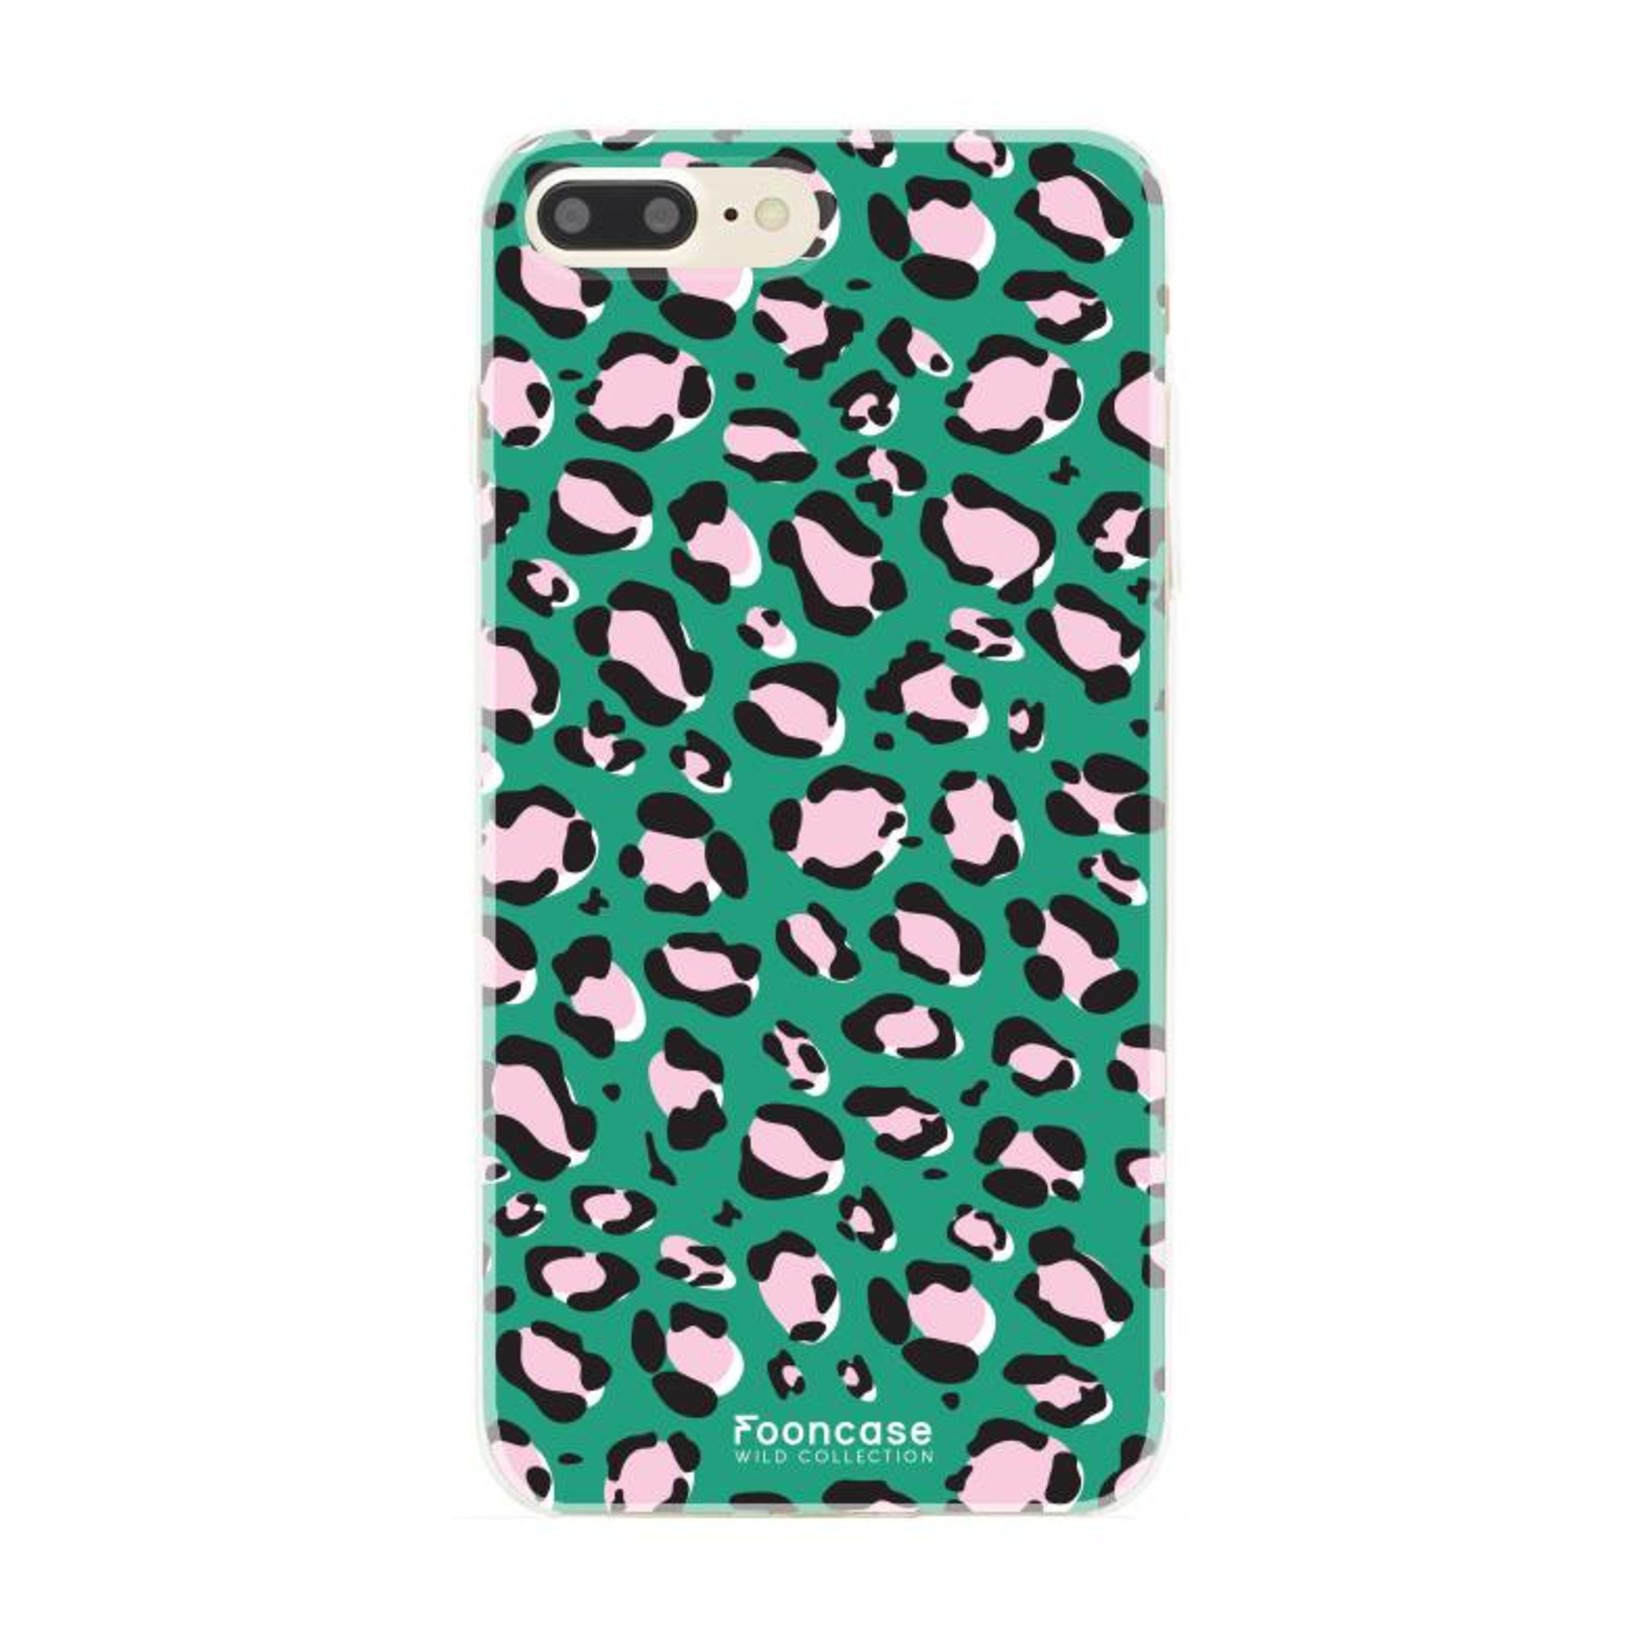 FOONCASE iPhone 7 Plus hoesje TPU Soft Case - Back Cover - Luipaard / Leopard print / Groen